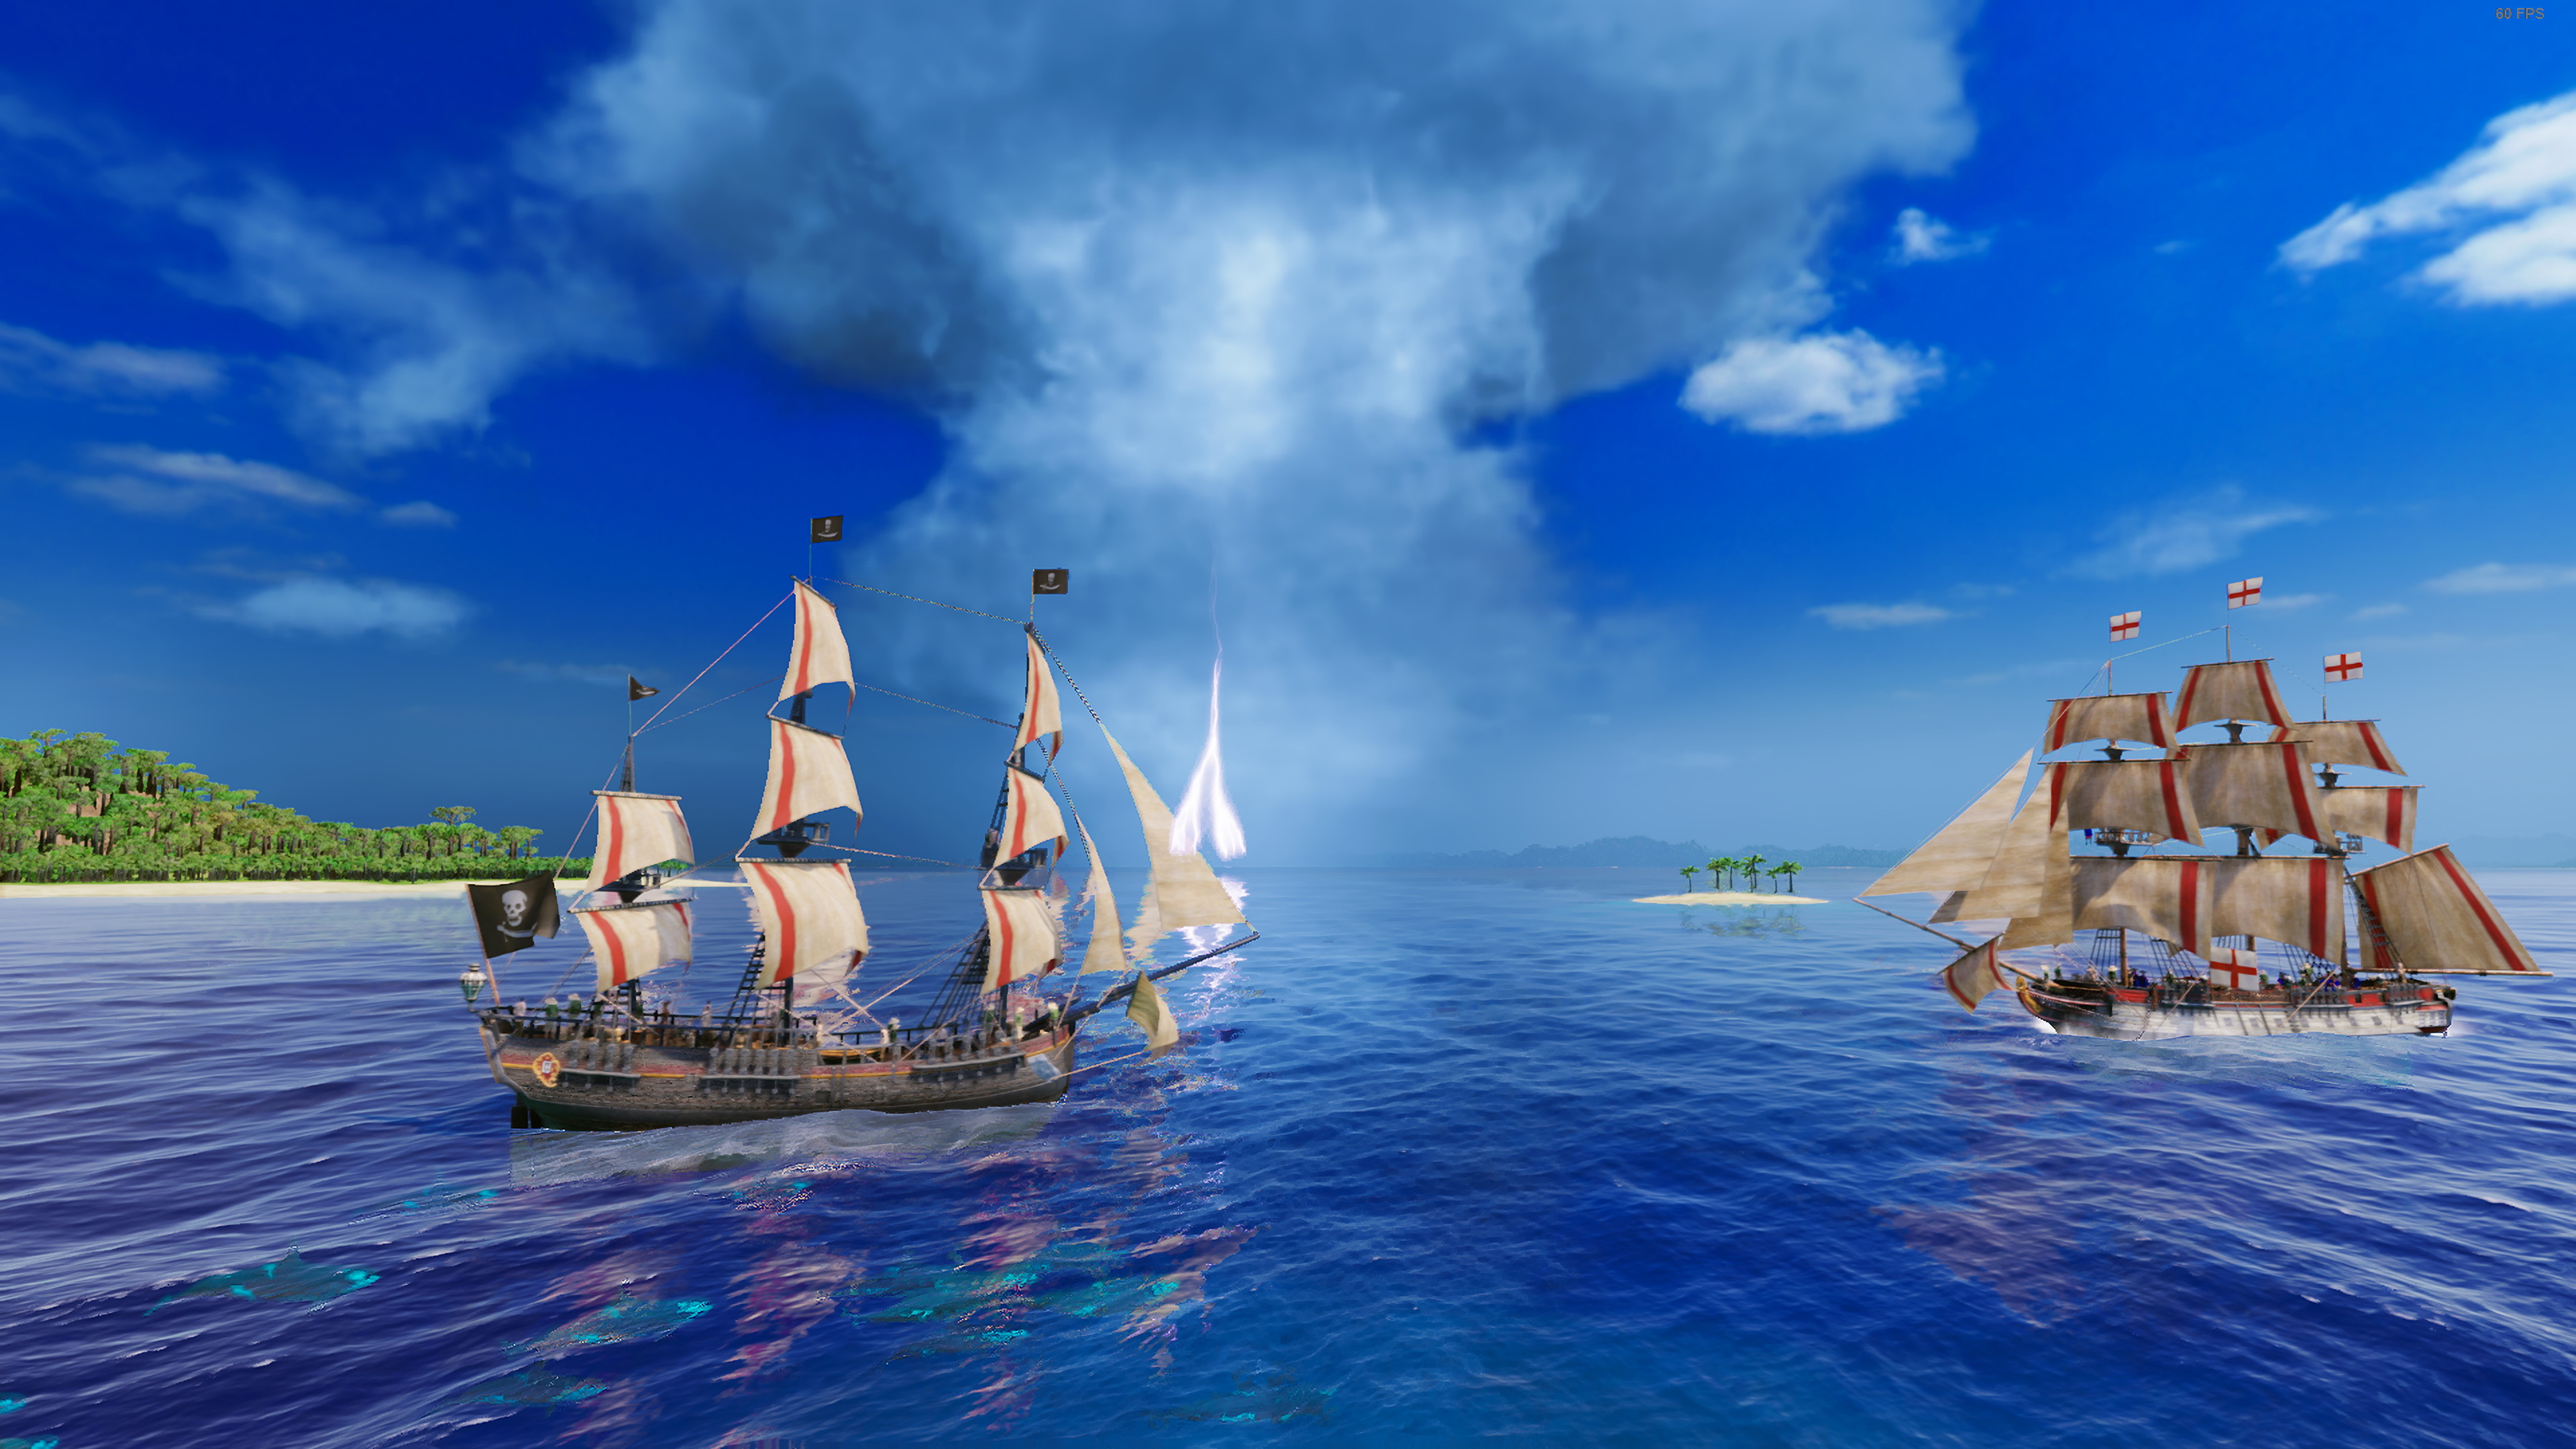 Port Royale 4 - Buccaneers screenshot